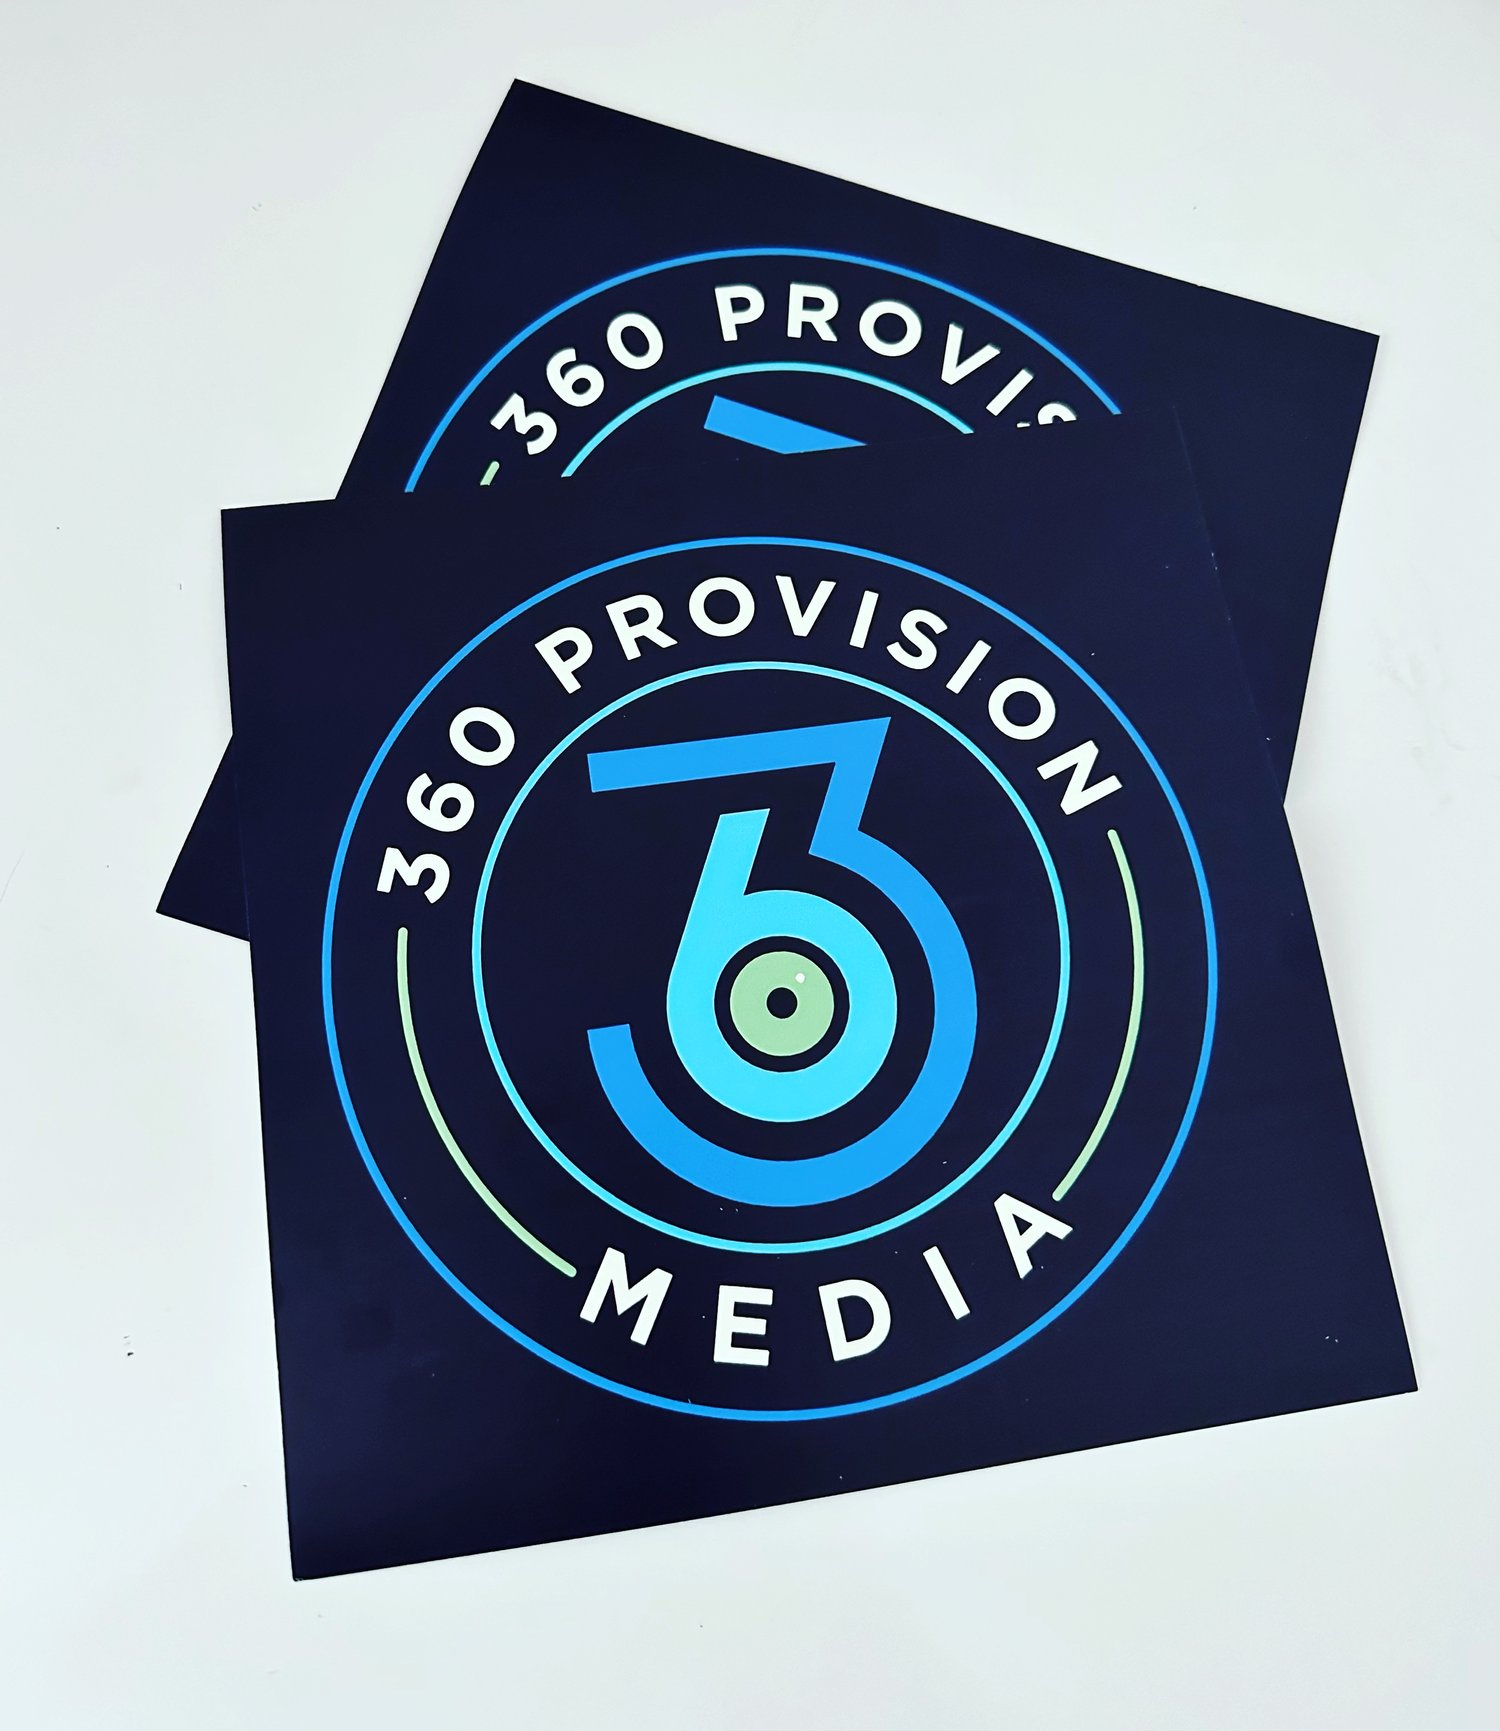     360 Provision Media